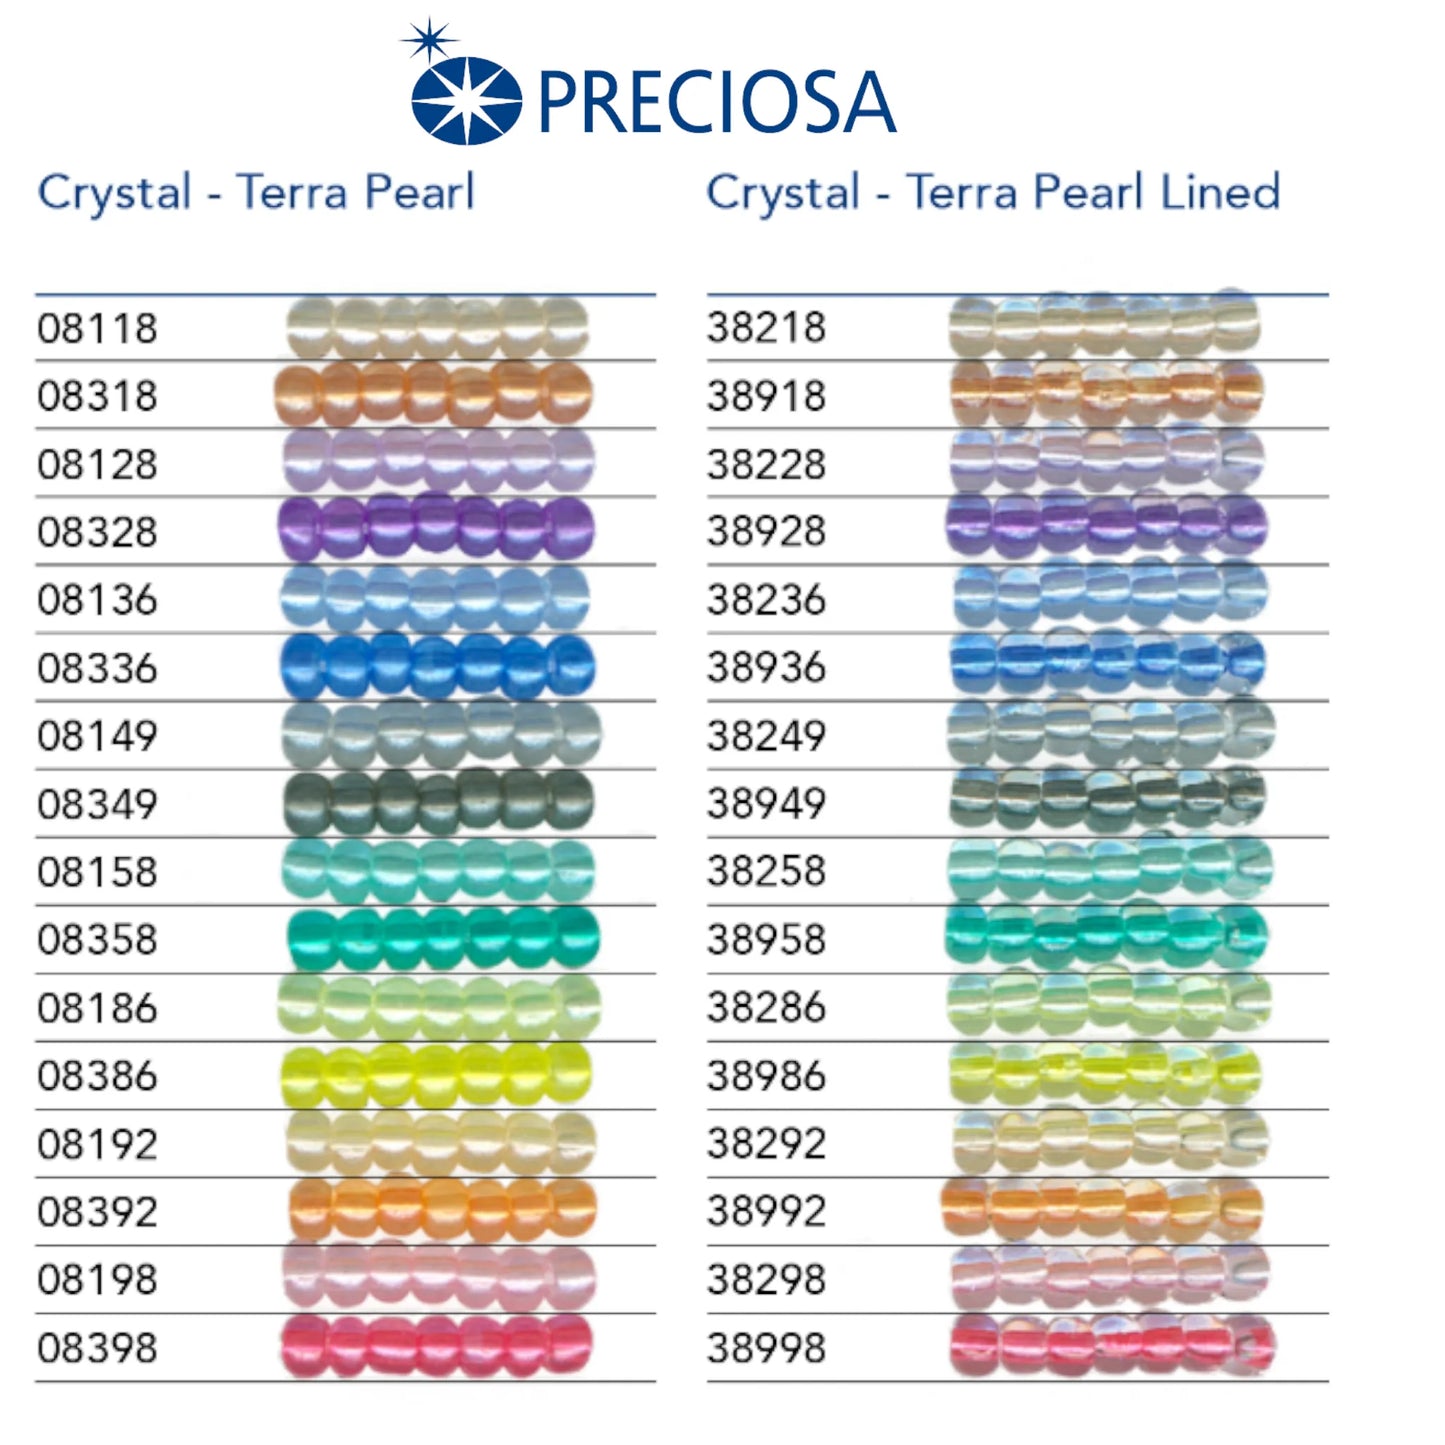 08349 Tschechische Rocailles PRECIOSA Rocailles 10/0 grau. Kristall - Terra Pearl.